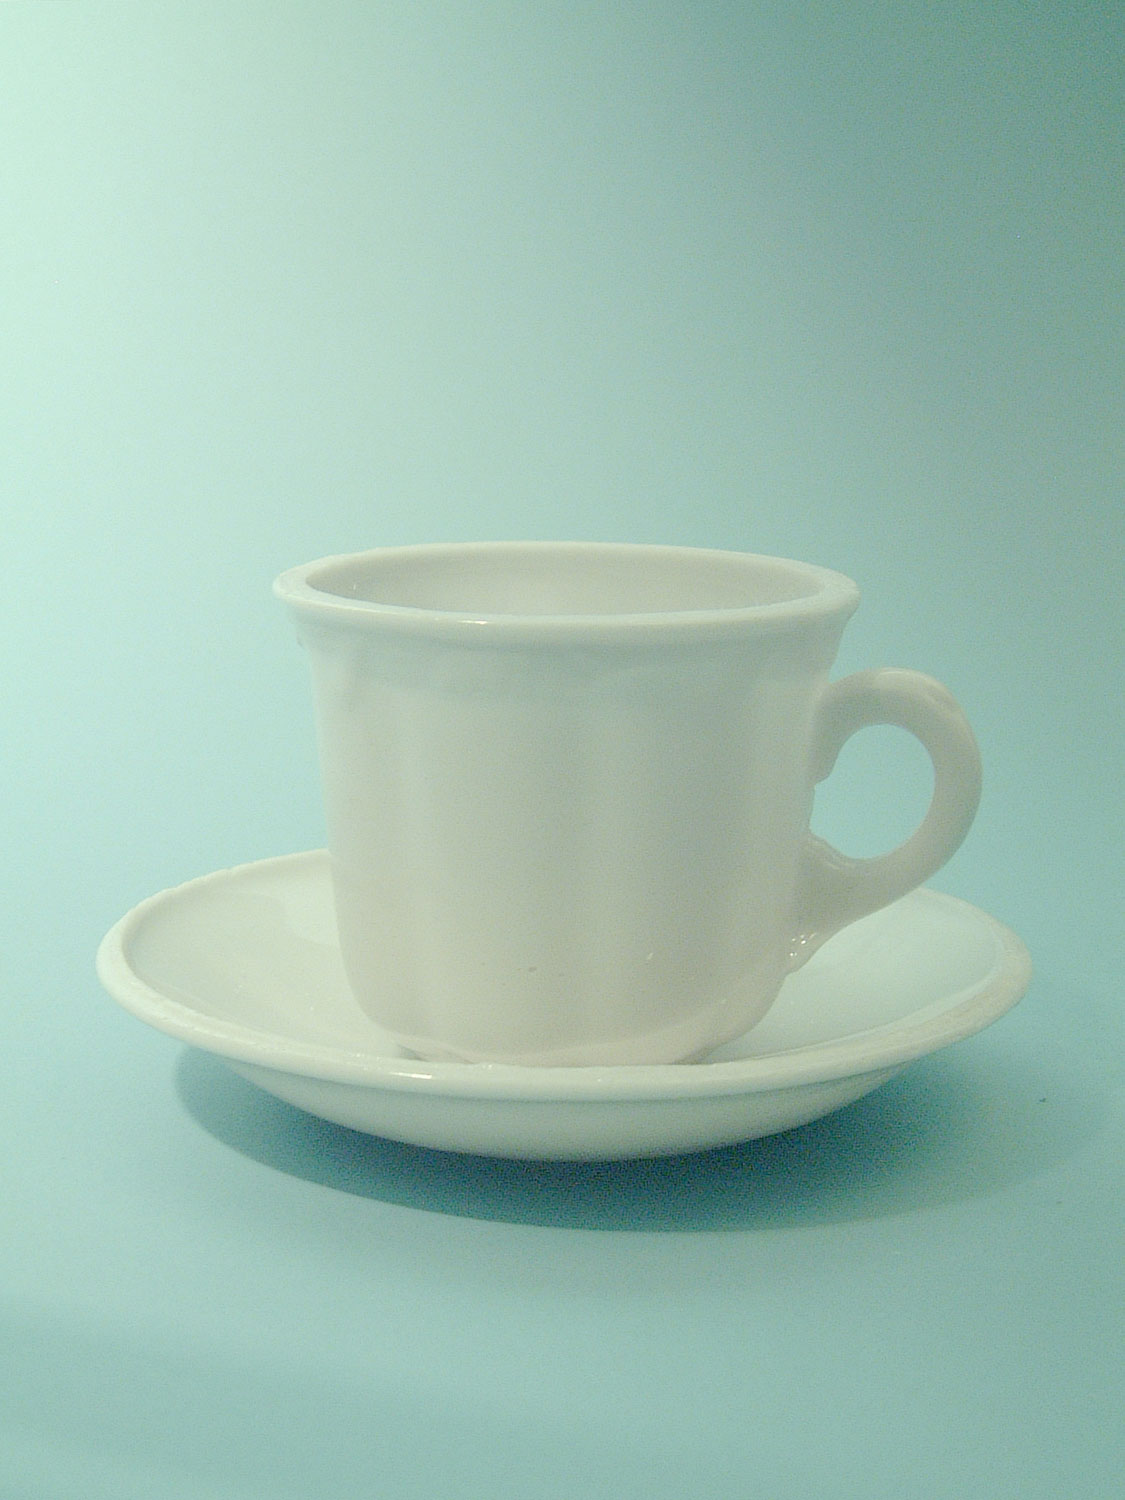 Sugar glass tea - coffee cup. Model number 3!